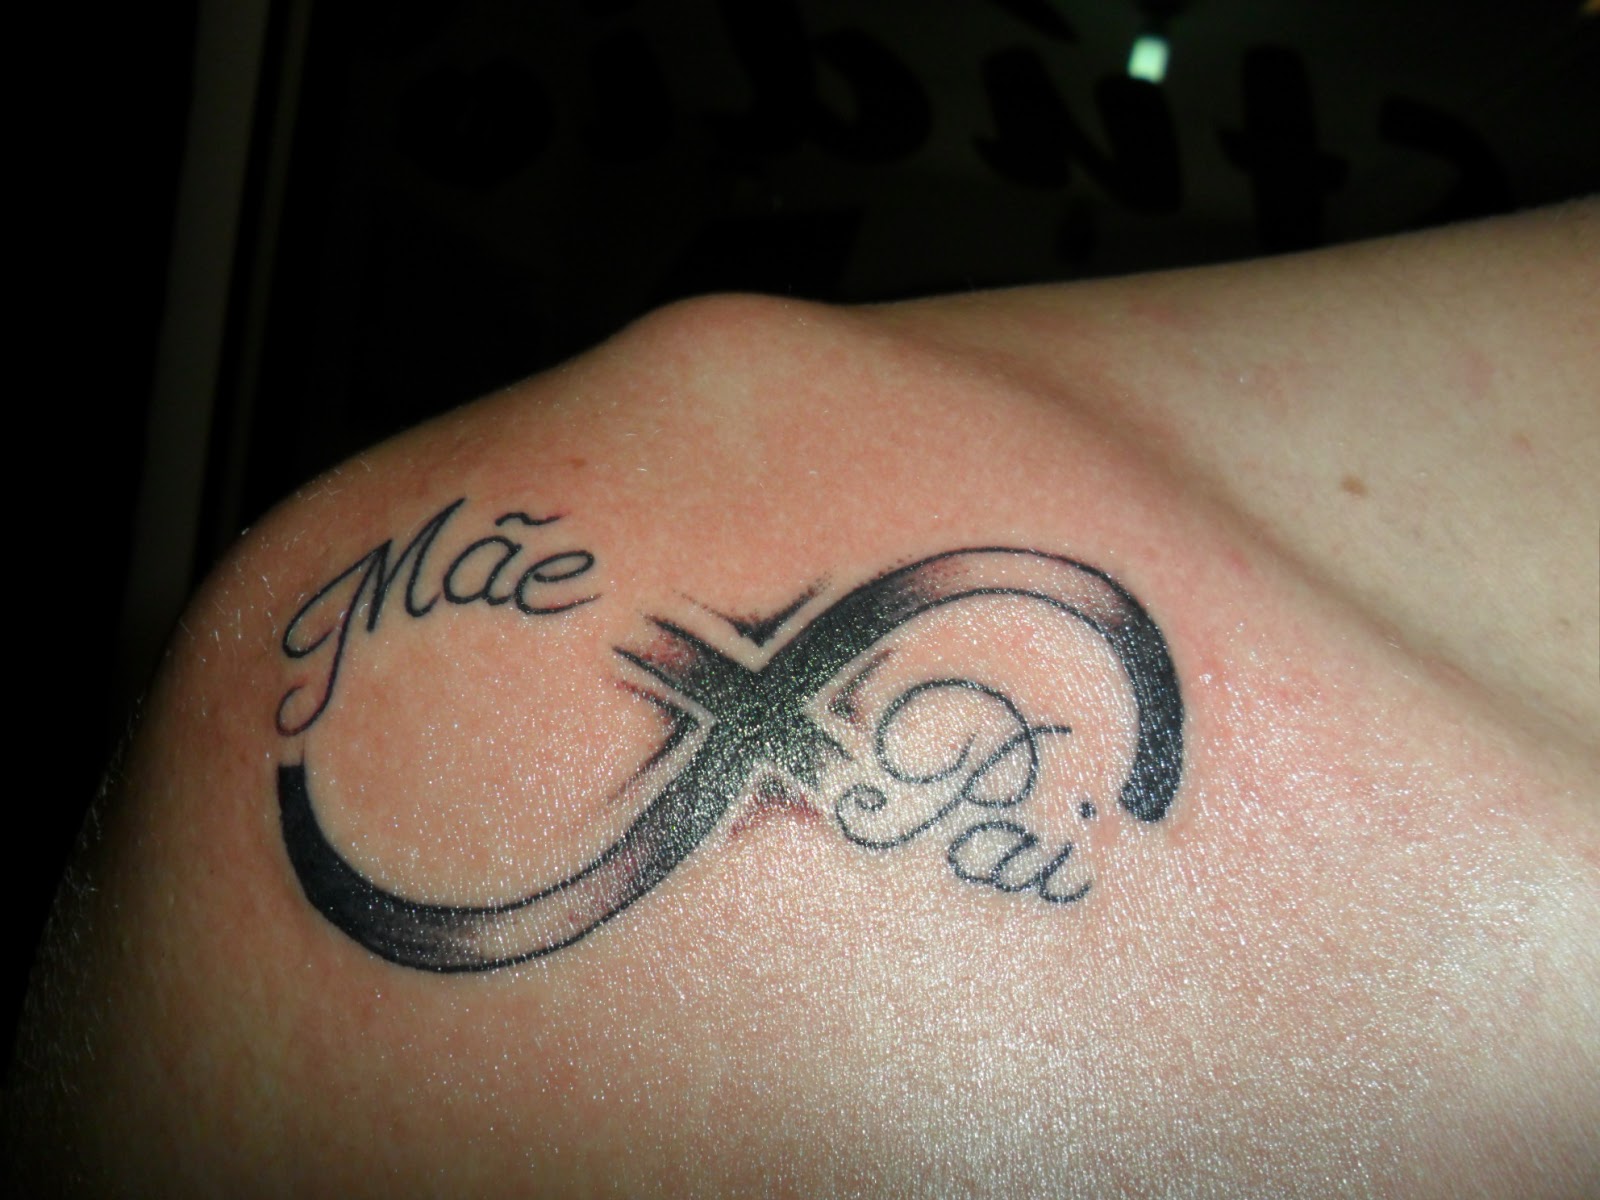 Leco's Tattoo: Simbolo do infinito